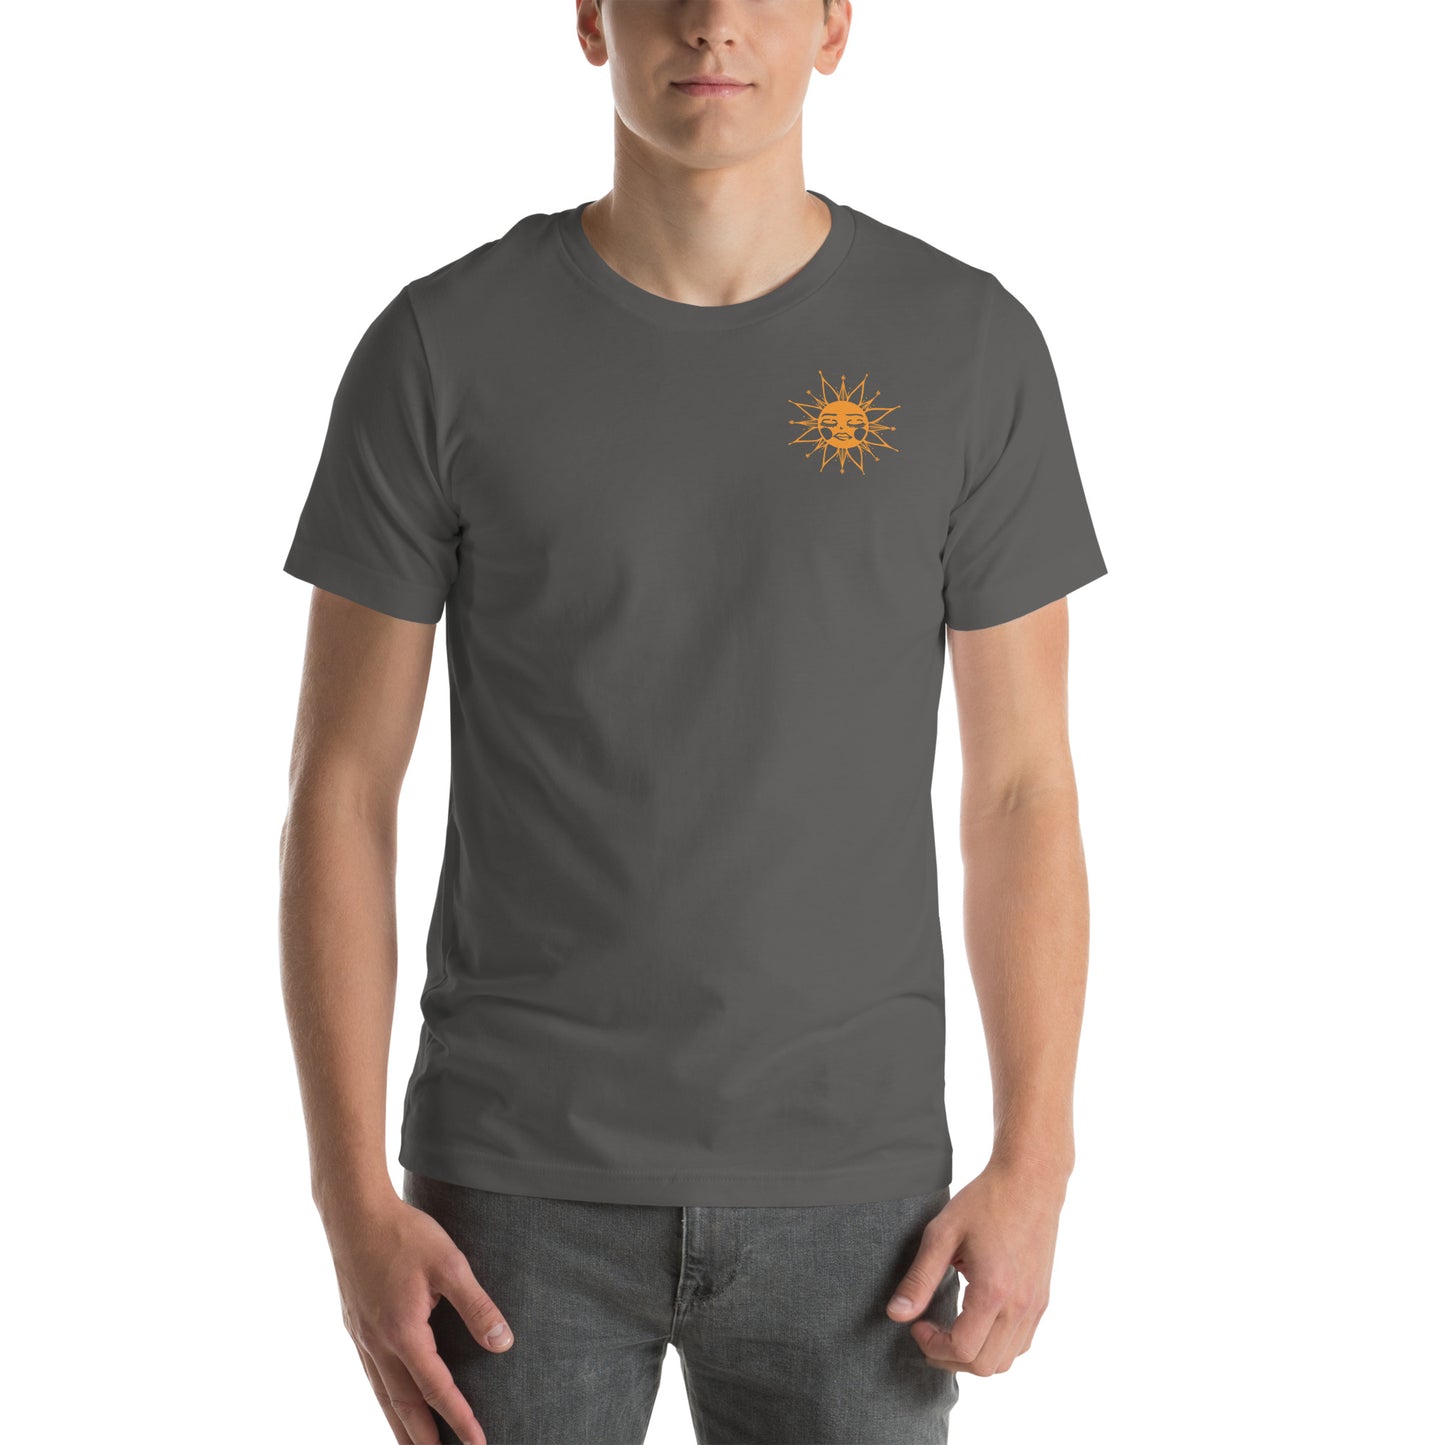 DORSTEN Sun T-shirt